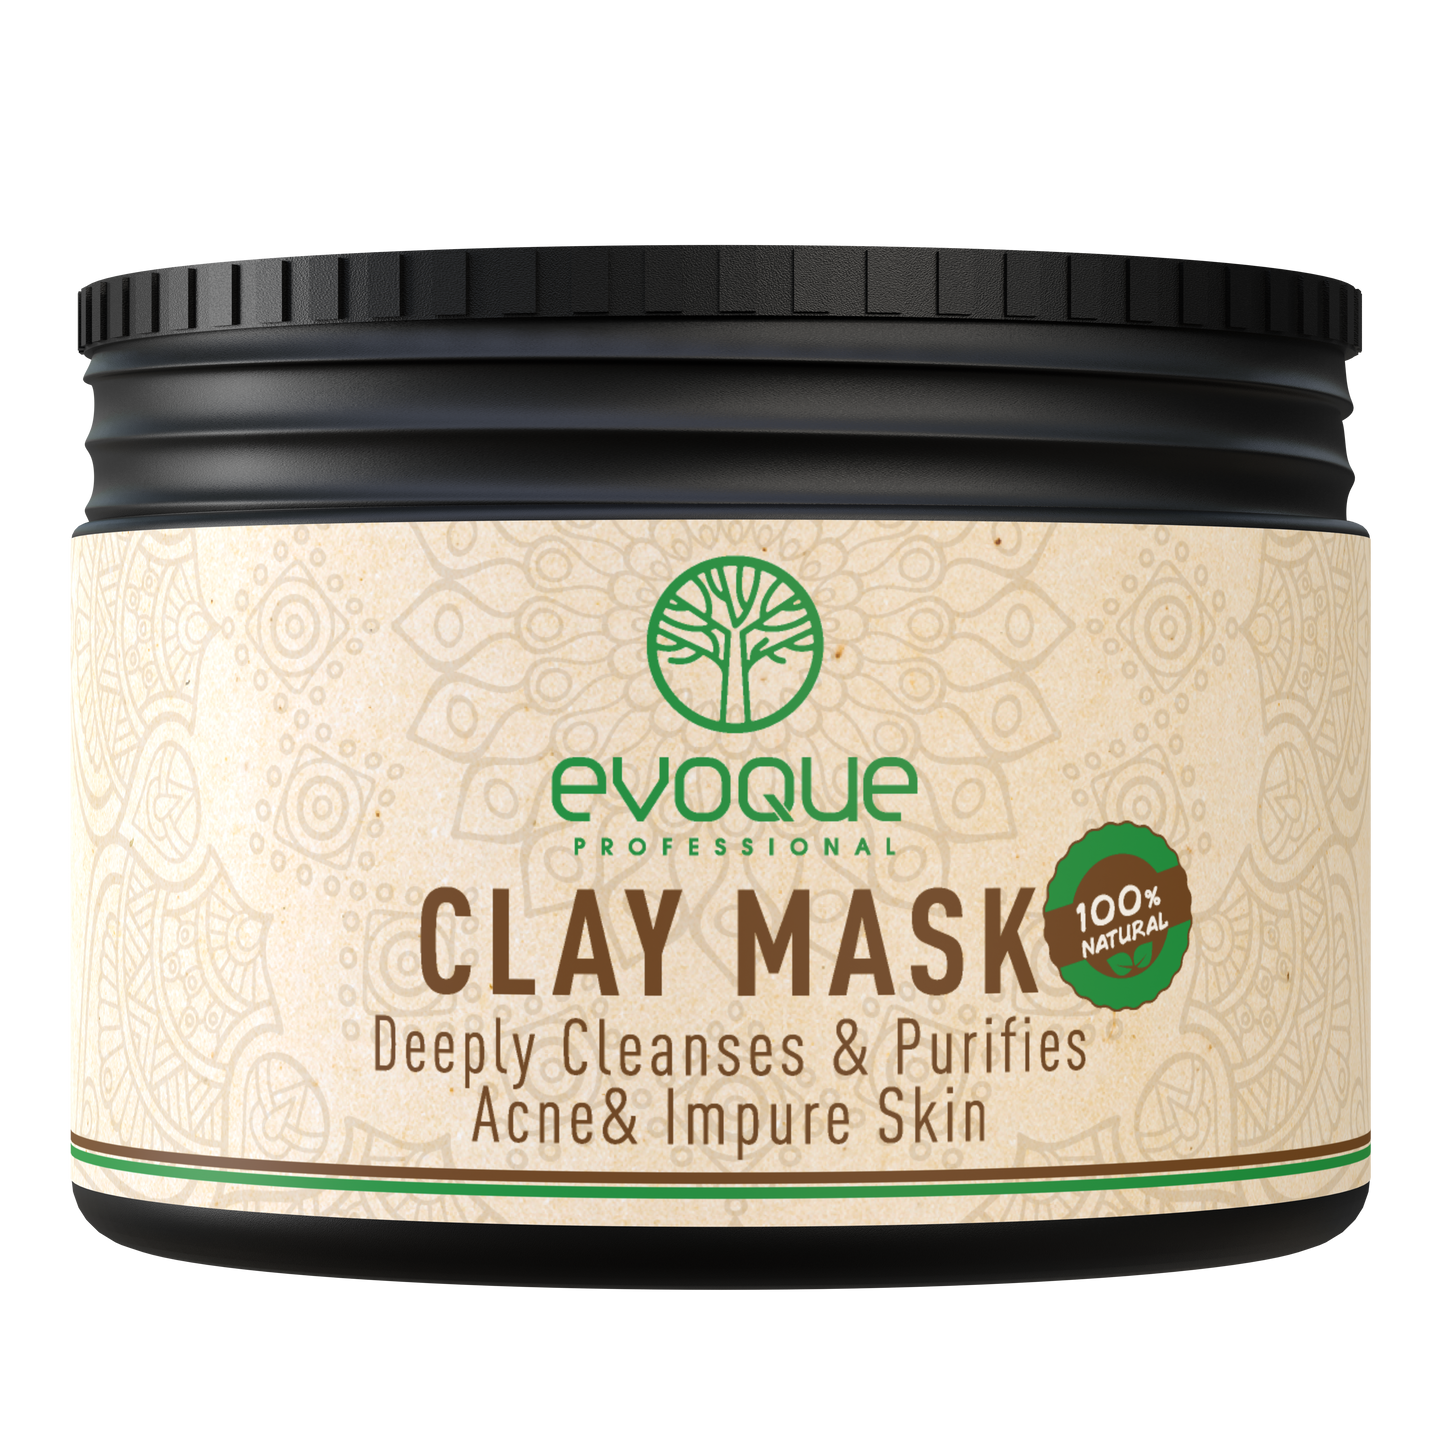 Masca de Argila pentru fata, Evoque Clay Mask 400ml